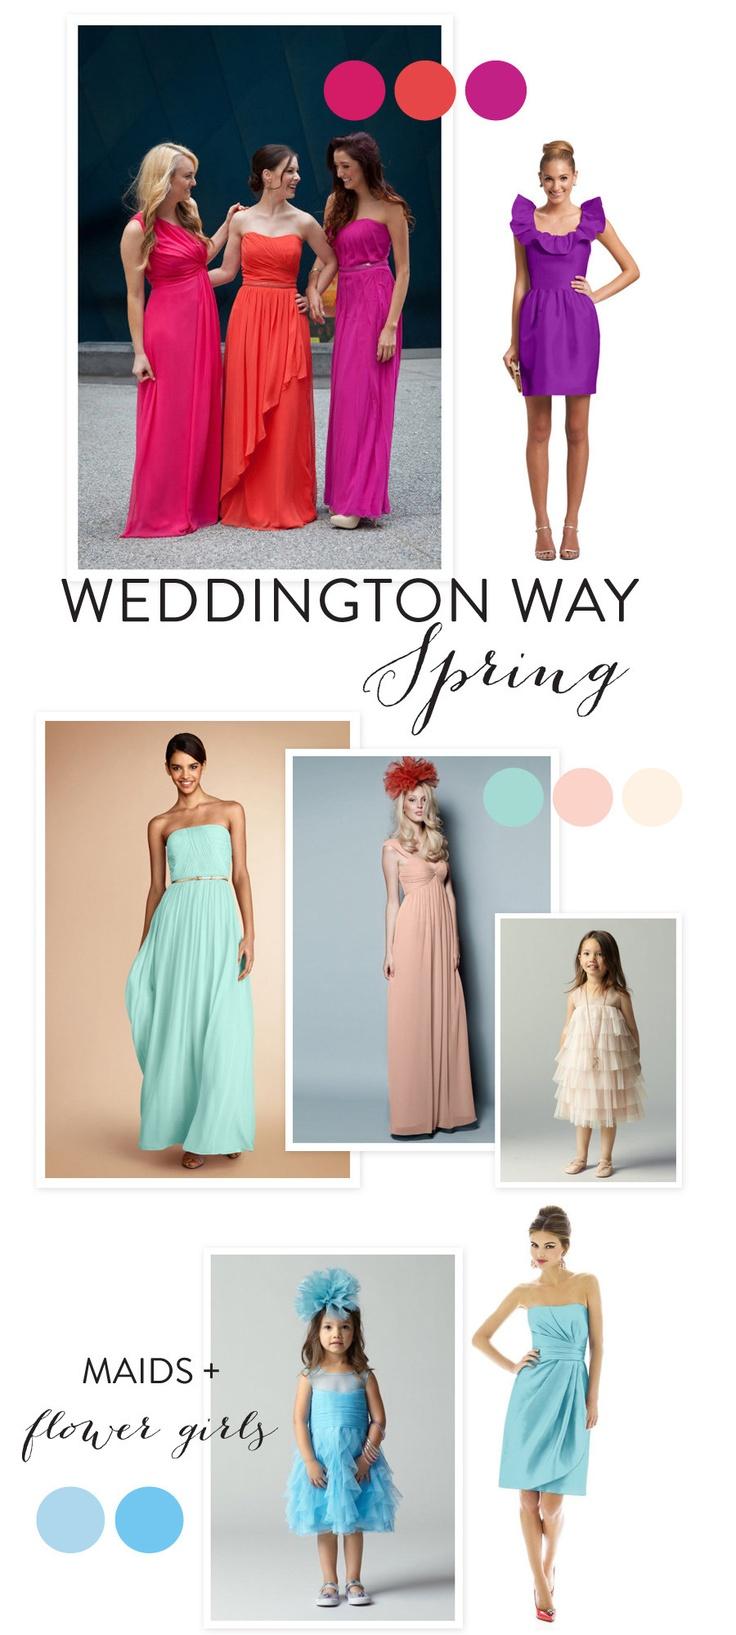 Wedding - Weddington Way Spring 2013   A Discount!